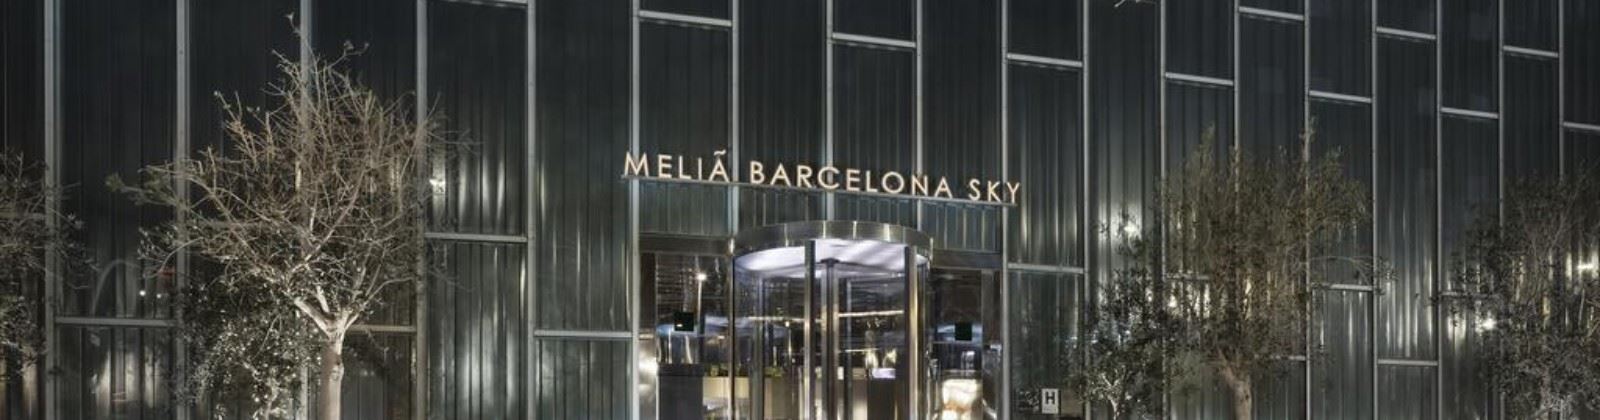 OLEVENE image - melia-barcelona-sky-olevene-hotel-restaurant-booking-